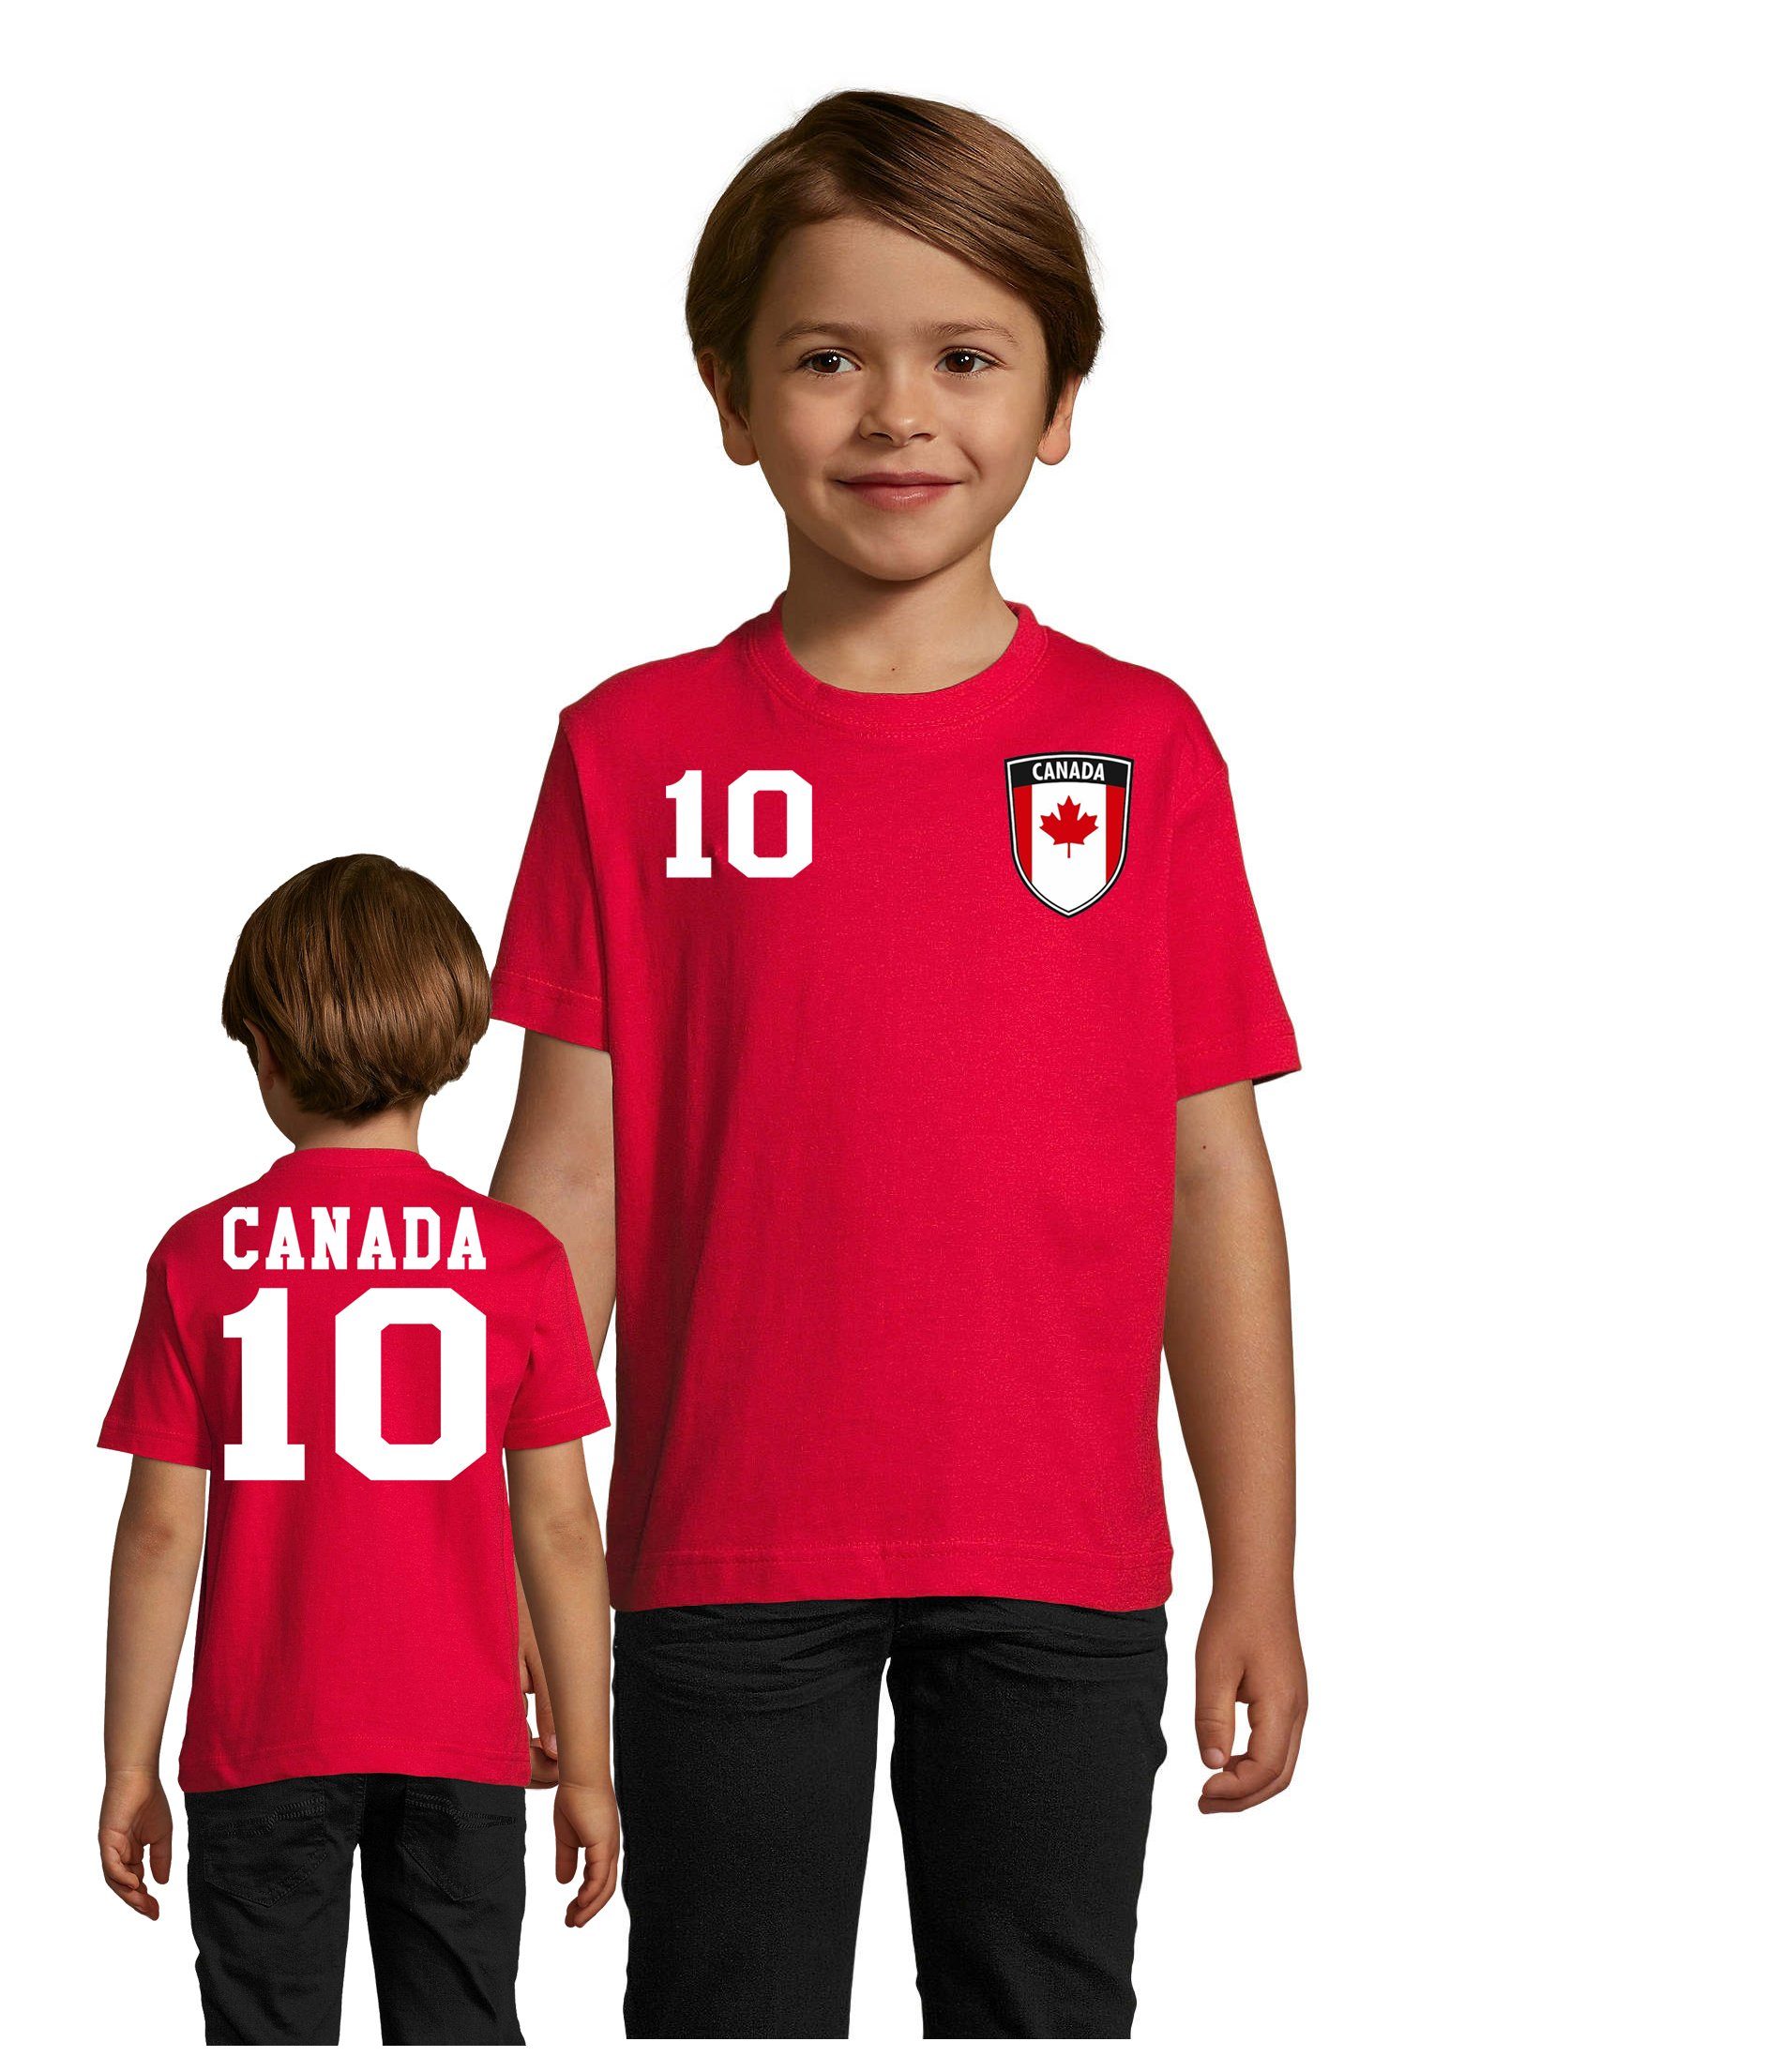 Blondie & Brownie T-Shirt Meister Copa Trikot Kanada Amerika WM Sport Kinder Fußball